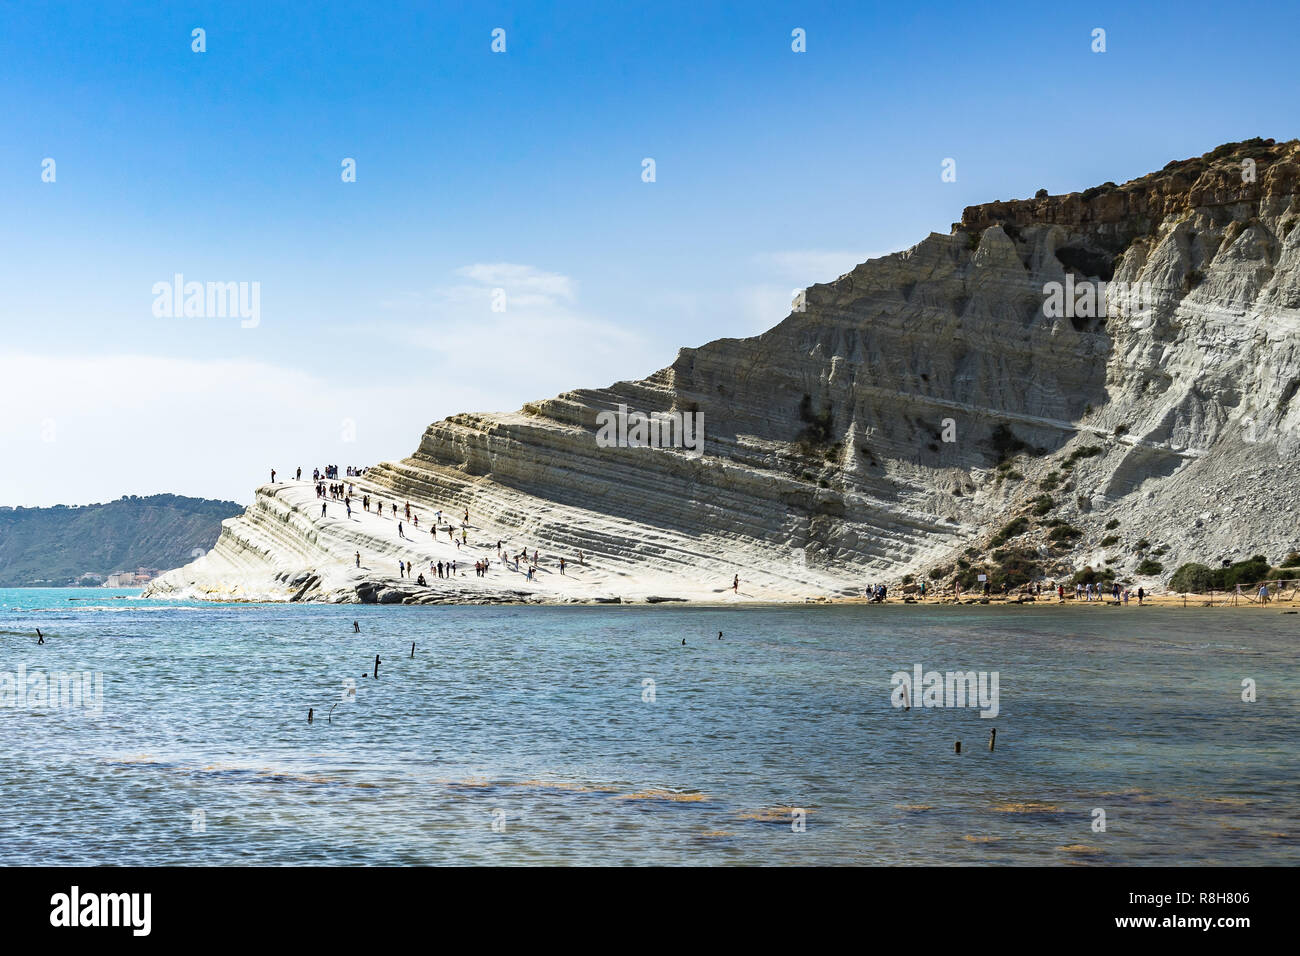 Am Strand von Scala dei Turchi, Realmonte, Provinz Agrigento, Sizilien, Italien Stockfoto